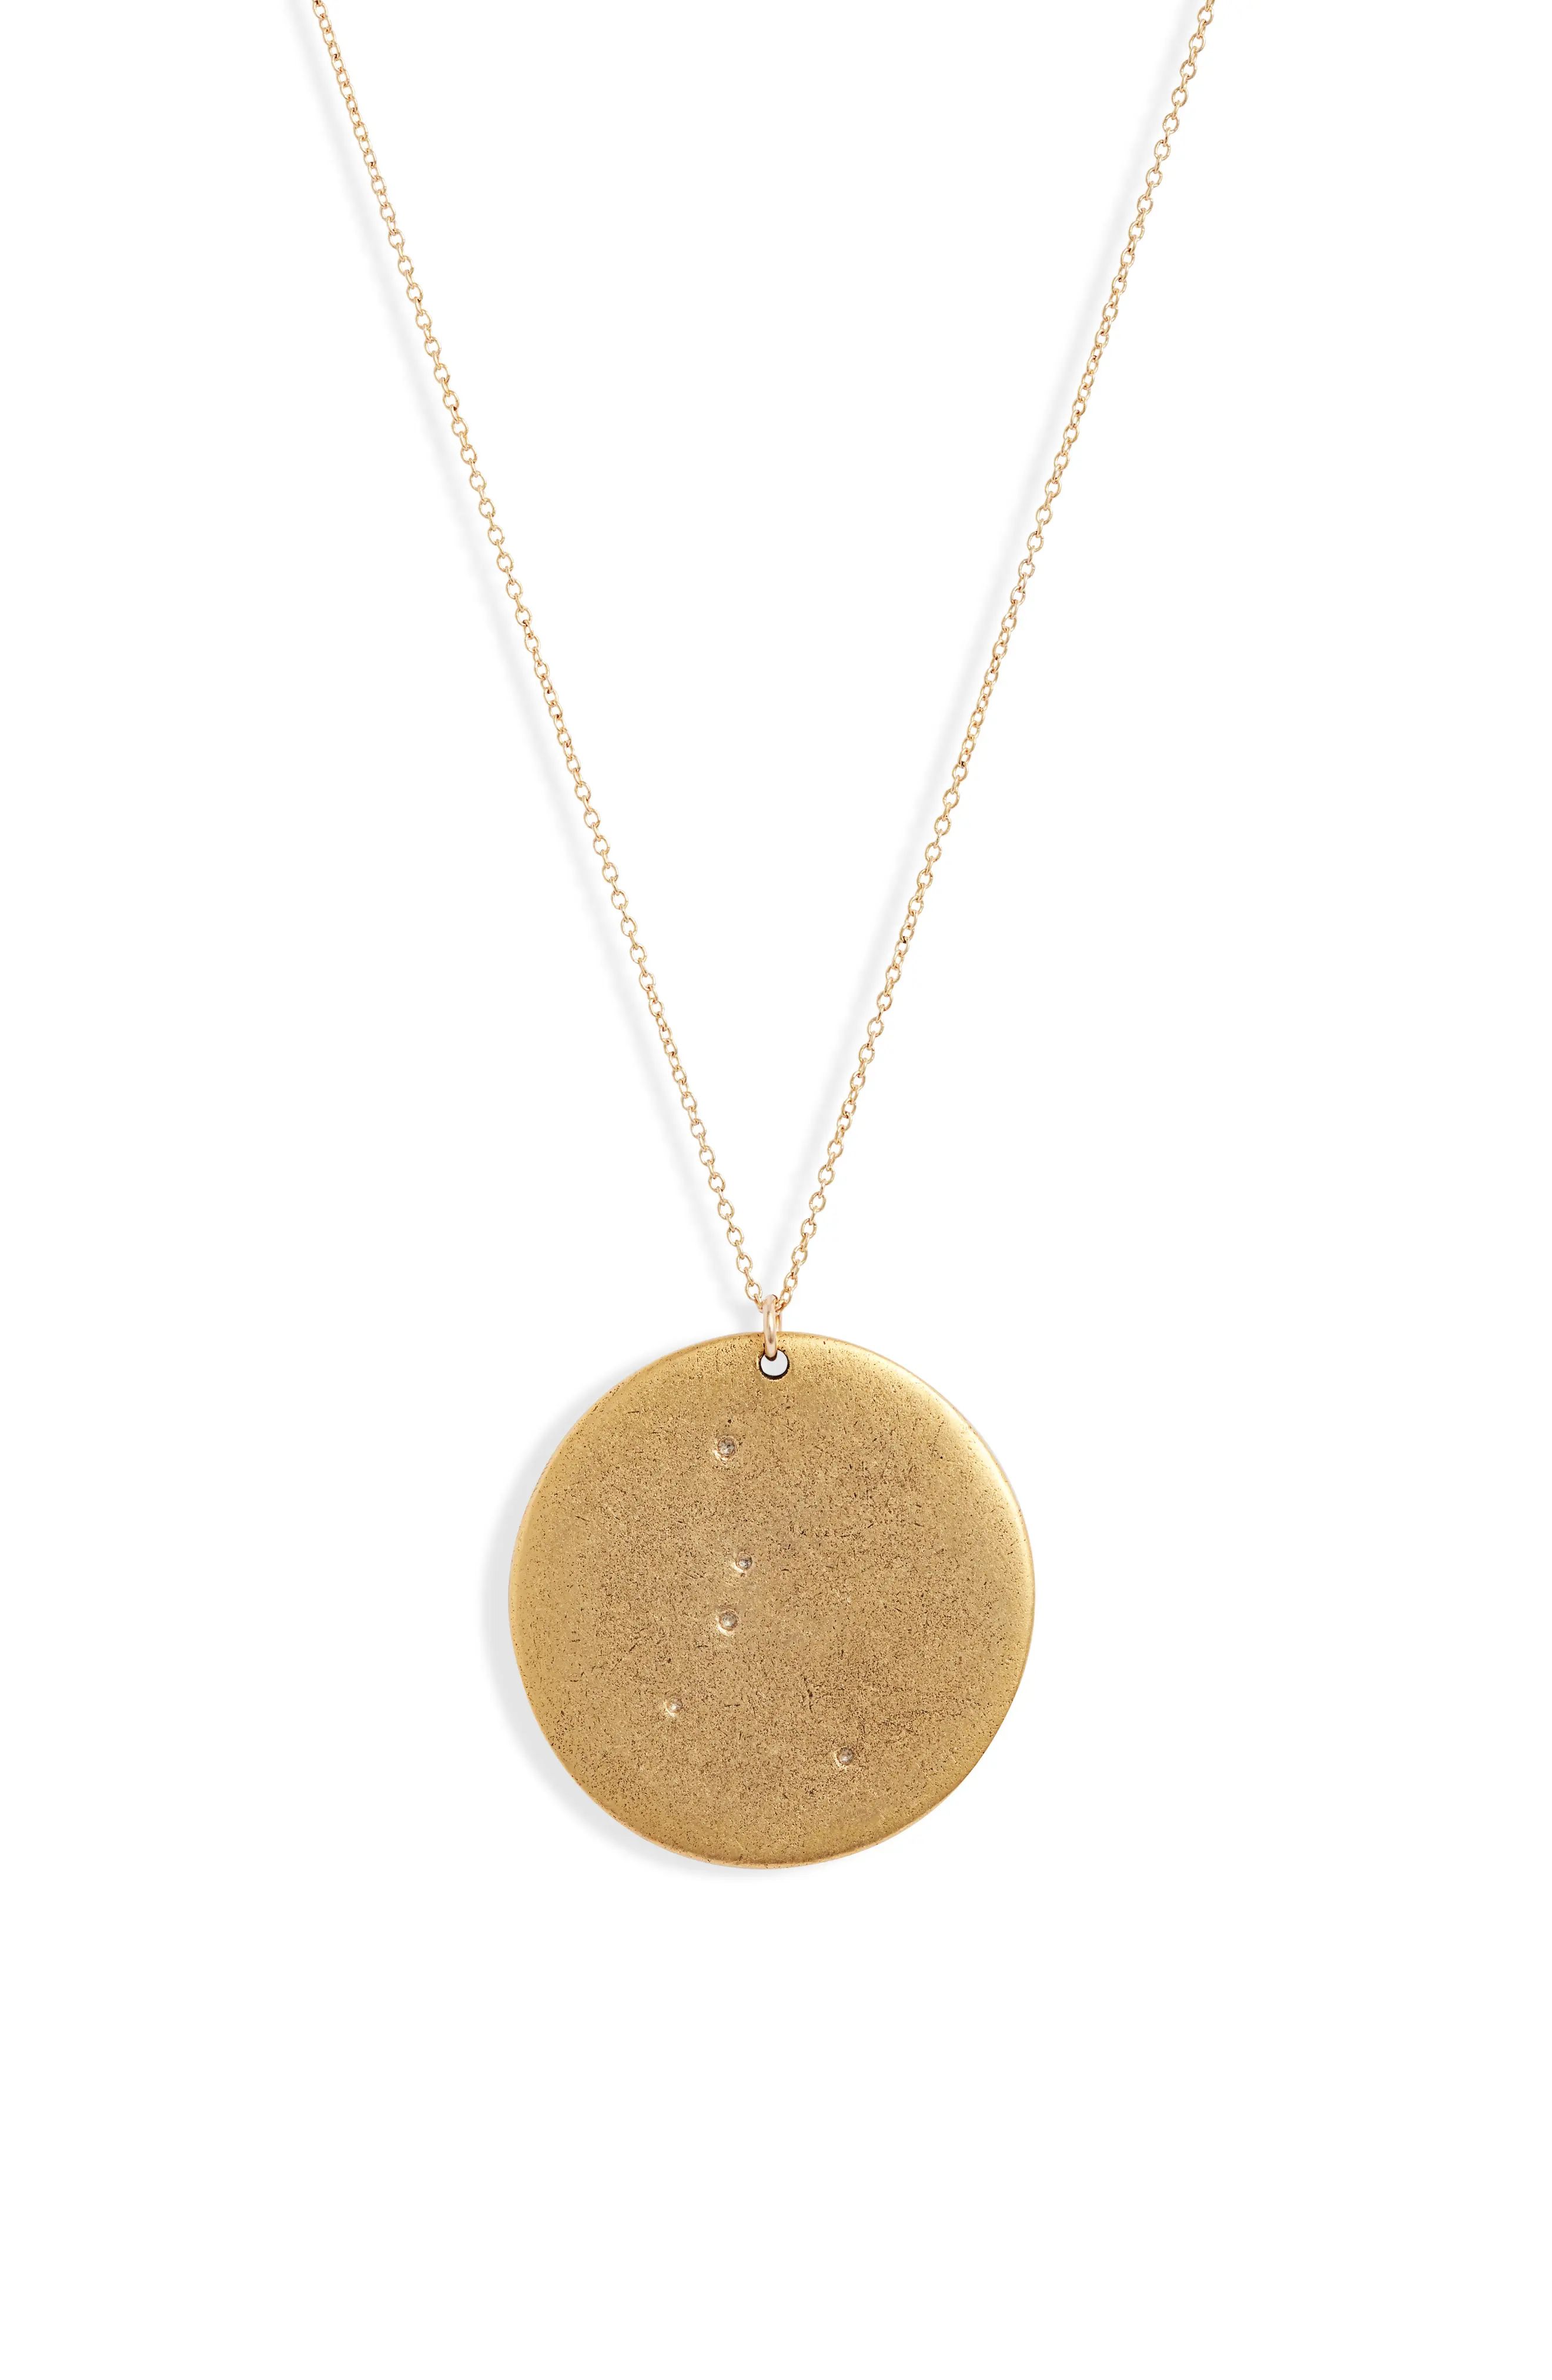 Set & Stones Constellation Pendant Necklace in Gold - Cancer at Nordstrom, Size Large | Nordstrom